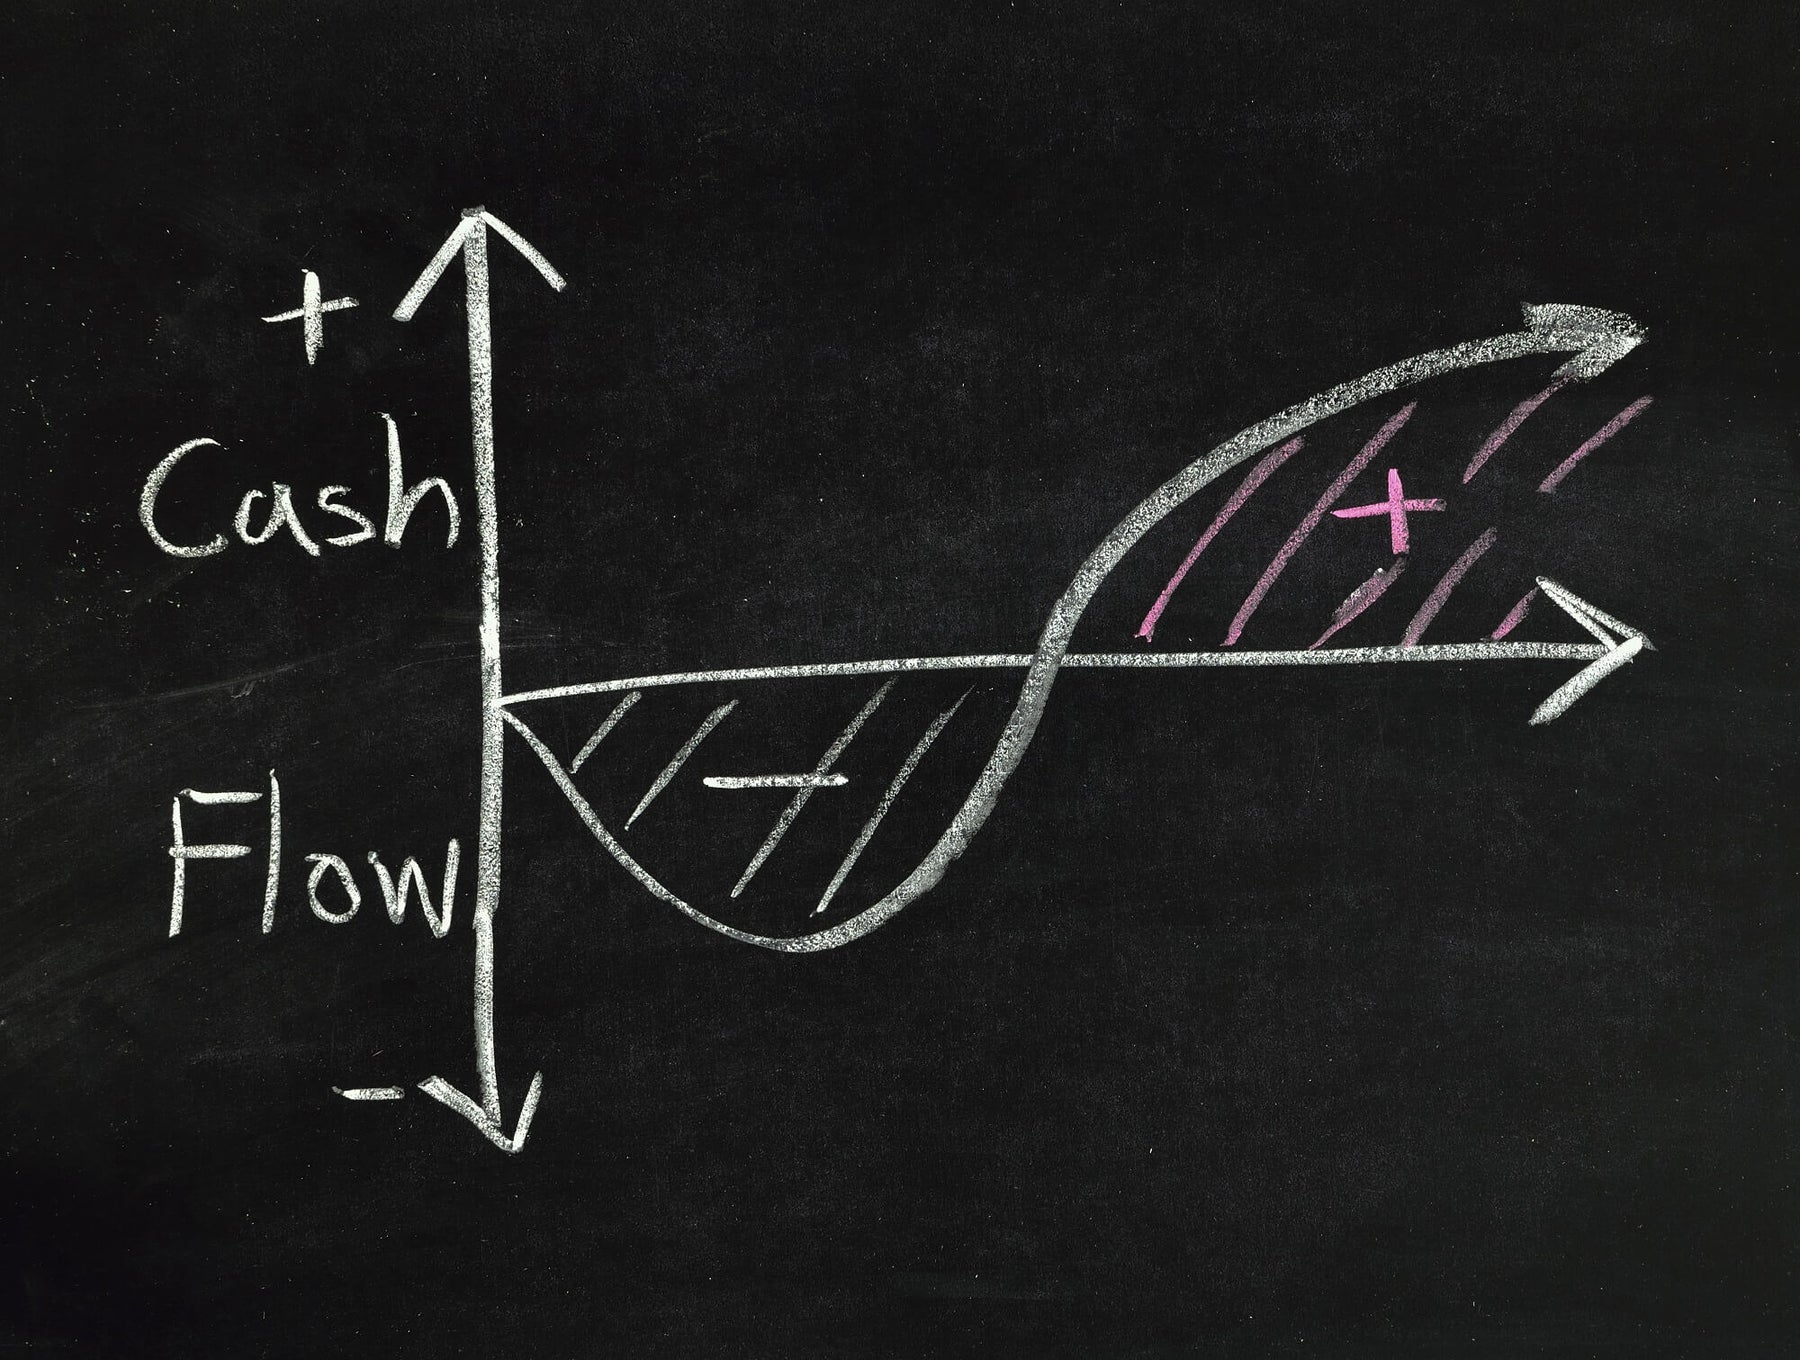 Liquiditätsplanung & Liquiditätsmanagement: So optimierst du deinen Cashflow